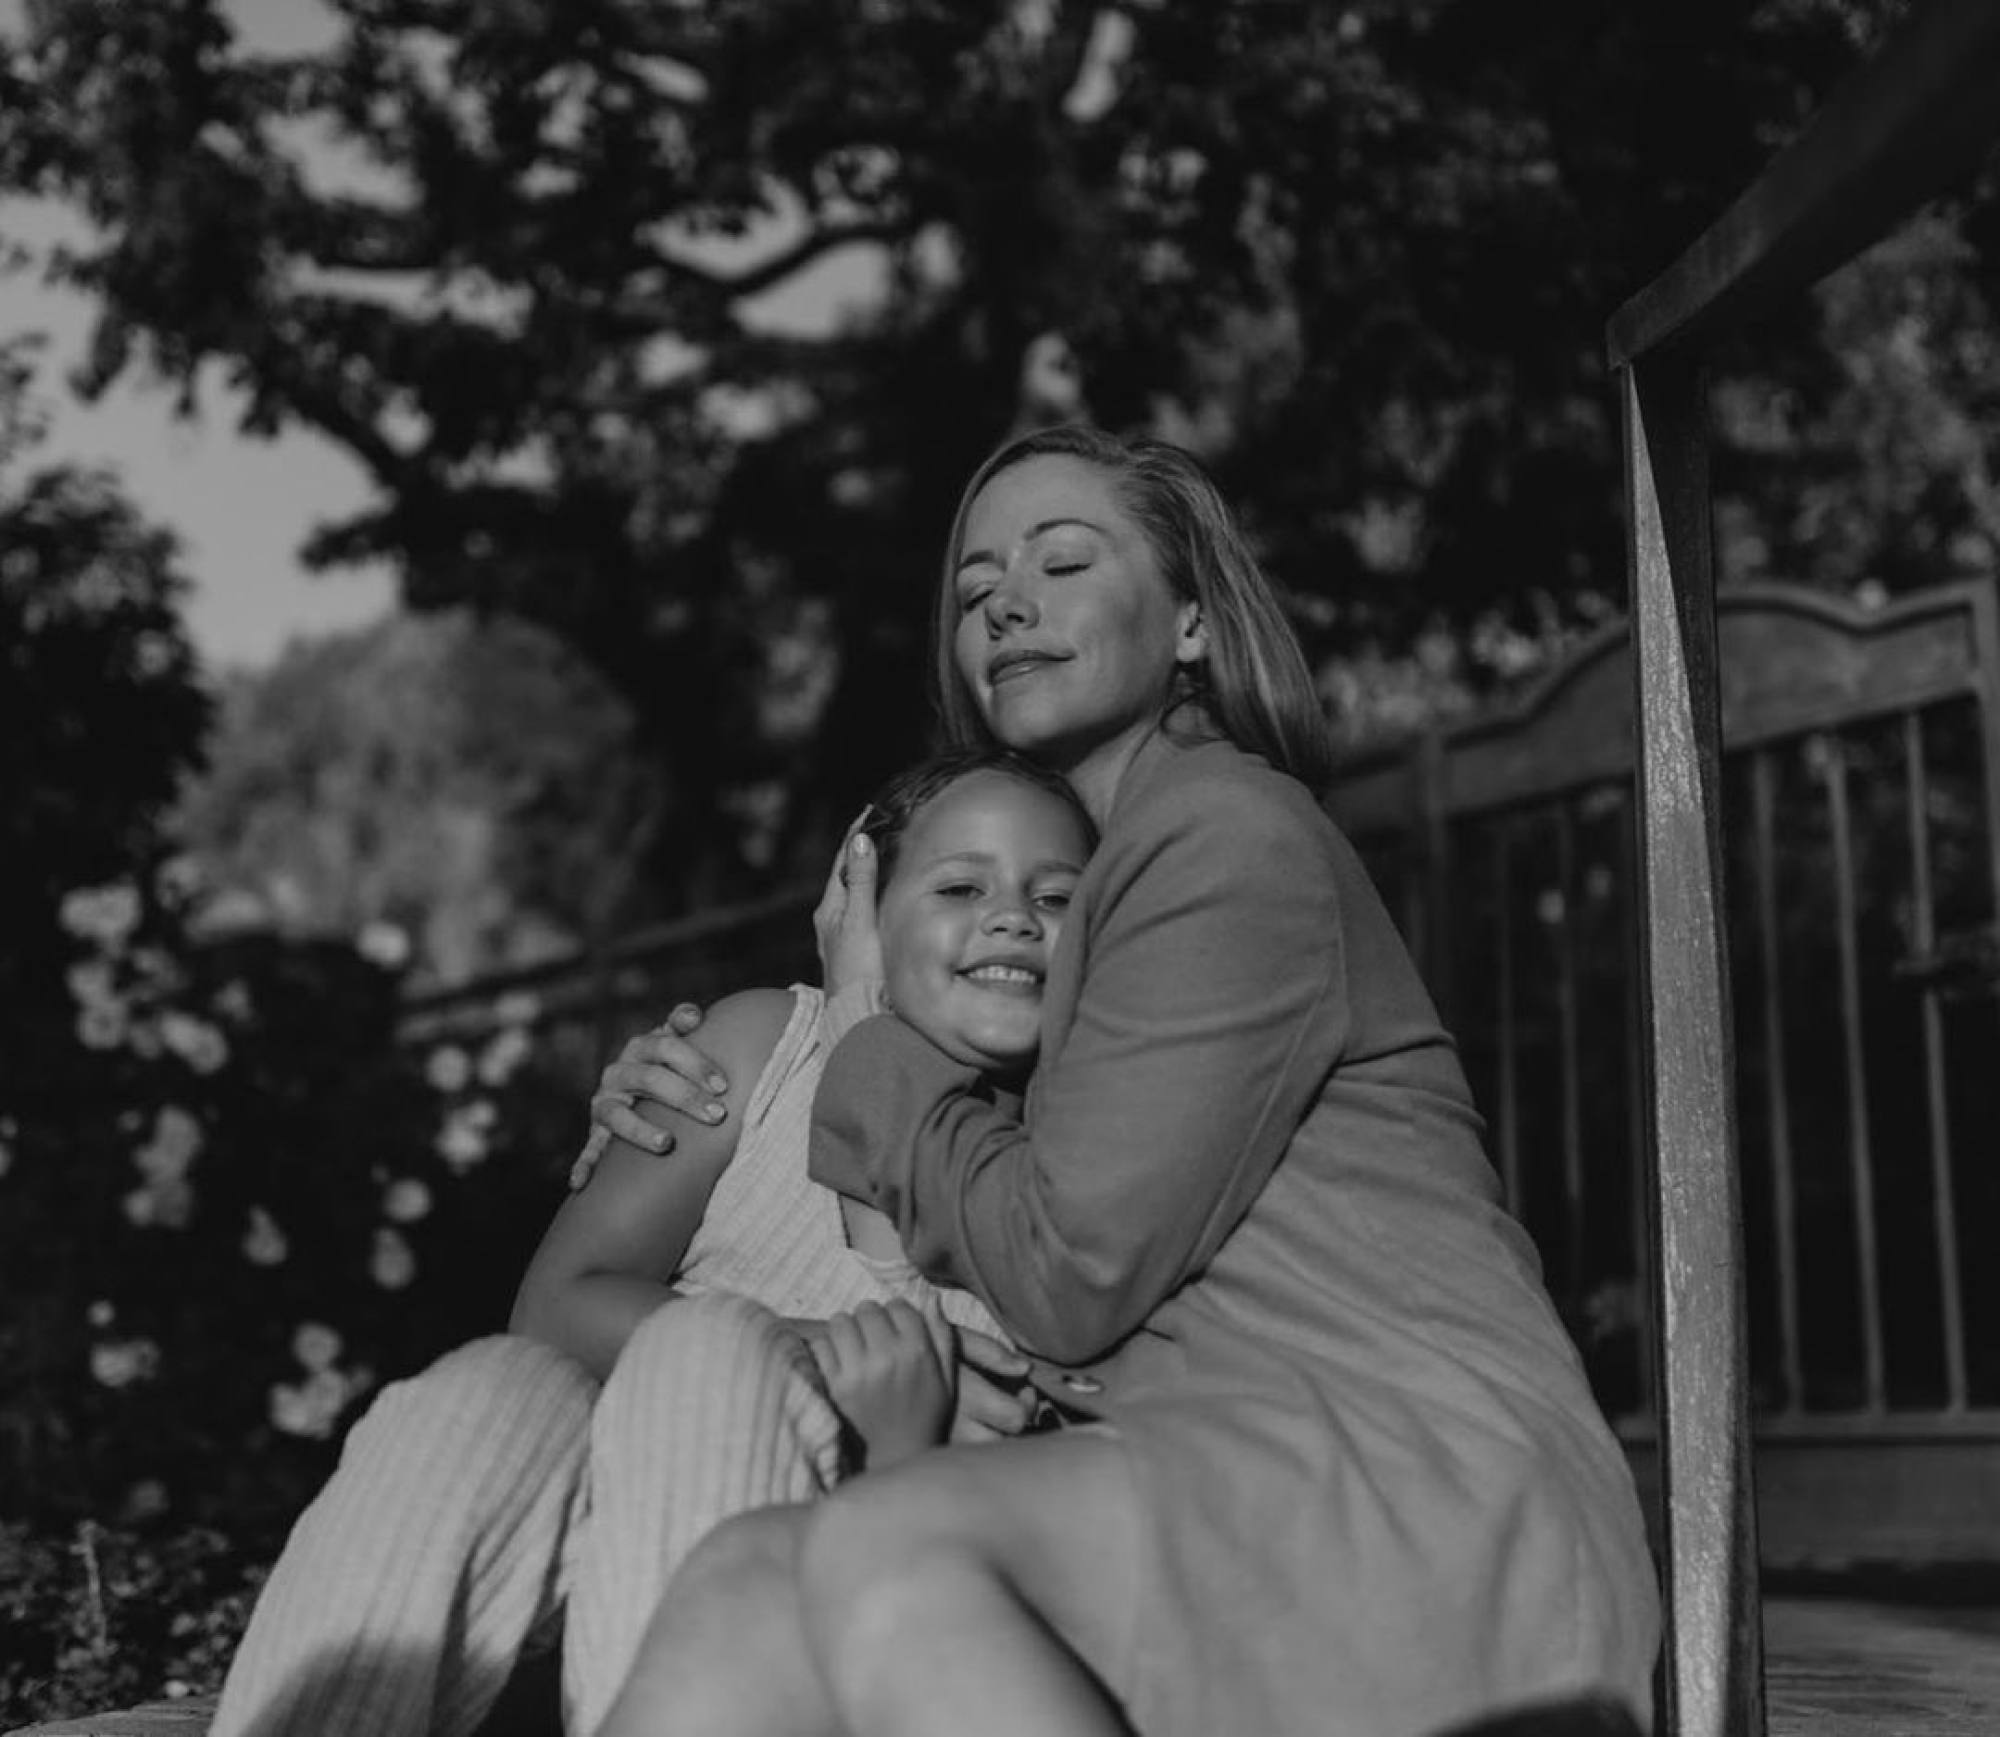 Wilkinson poses with her daughter Alijah. Photo: @kendrawilkinson/Instagram